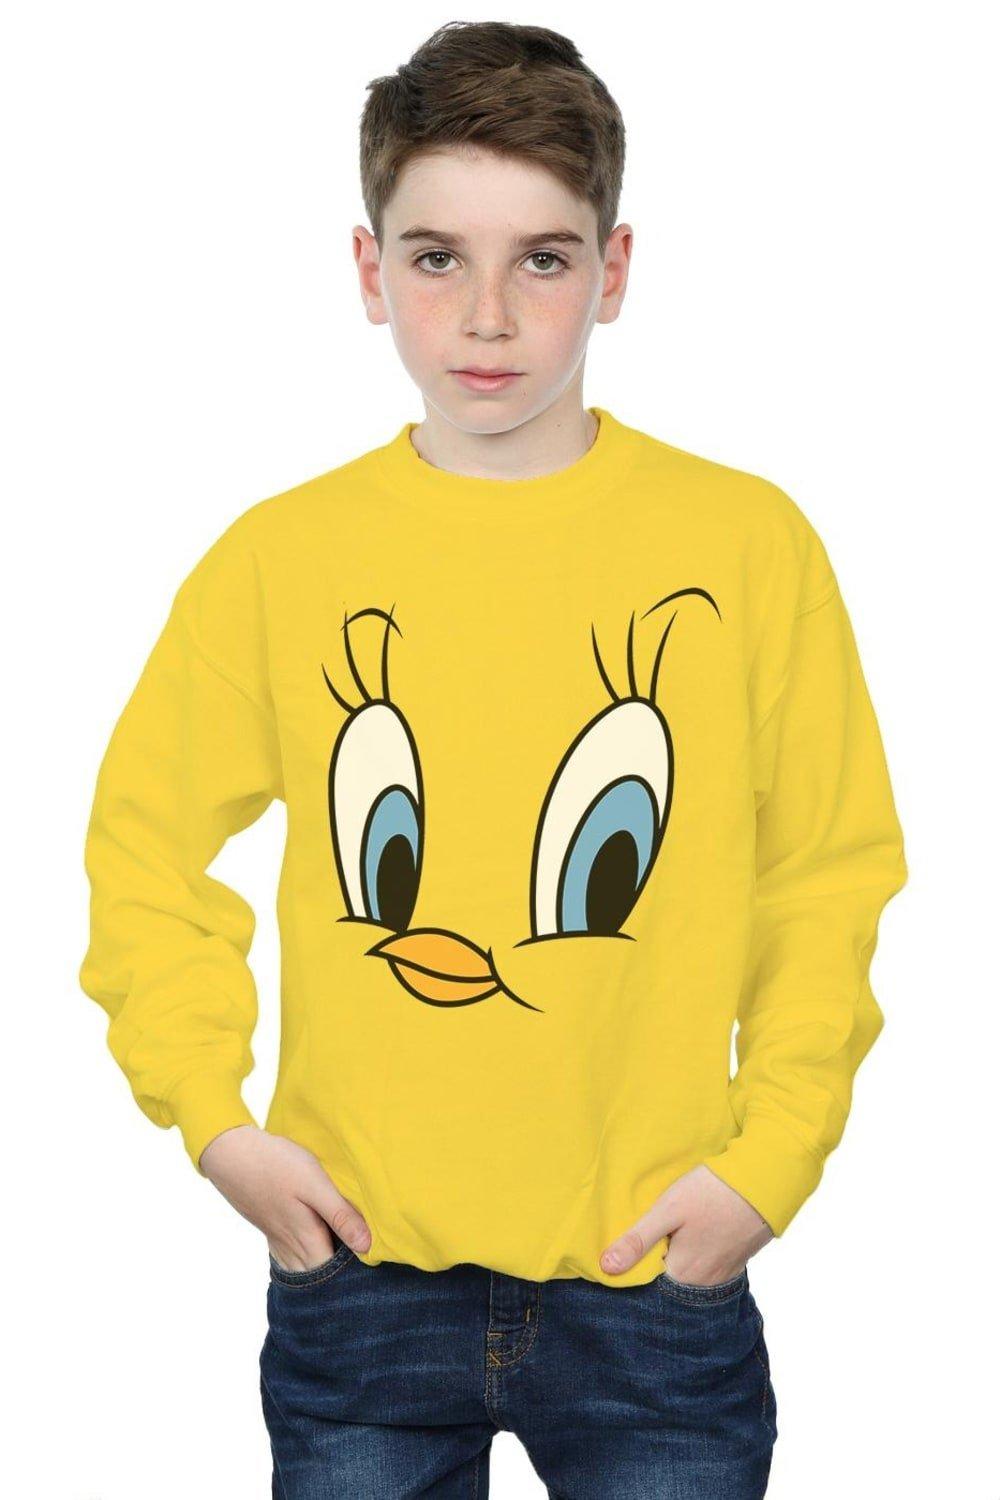 Tweety Pie Face Sweatshirt